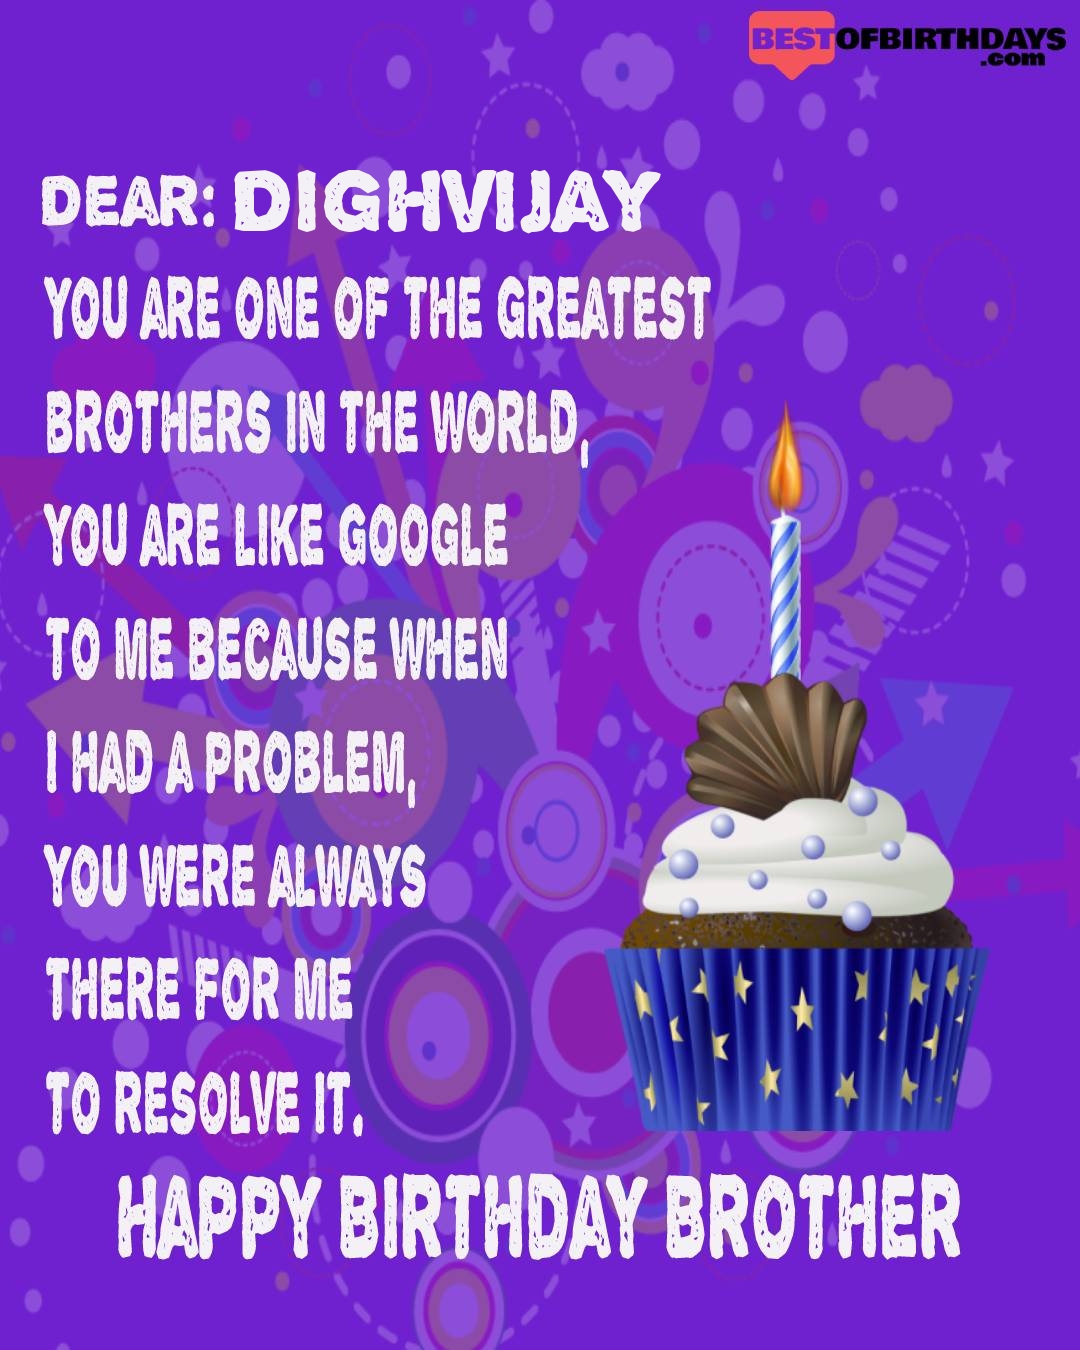 Happy birthday dighvijay bhai brother bro